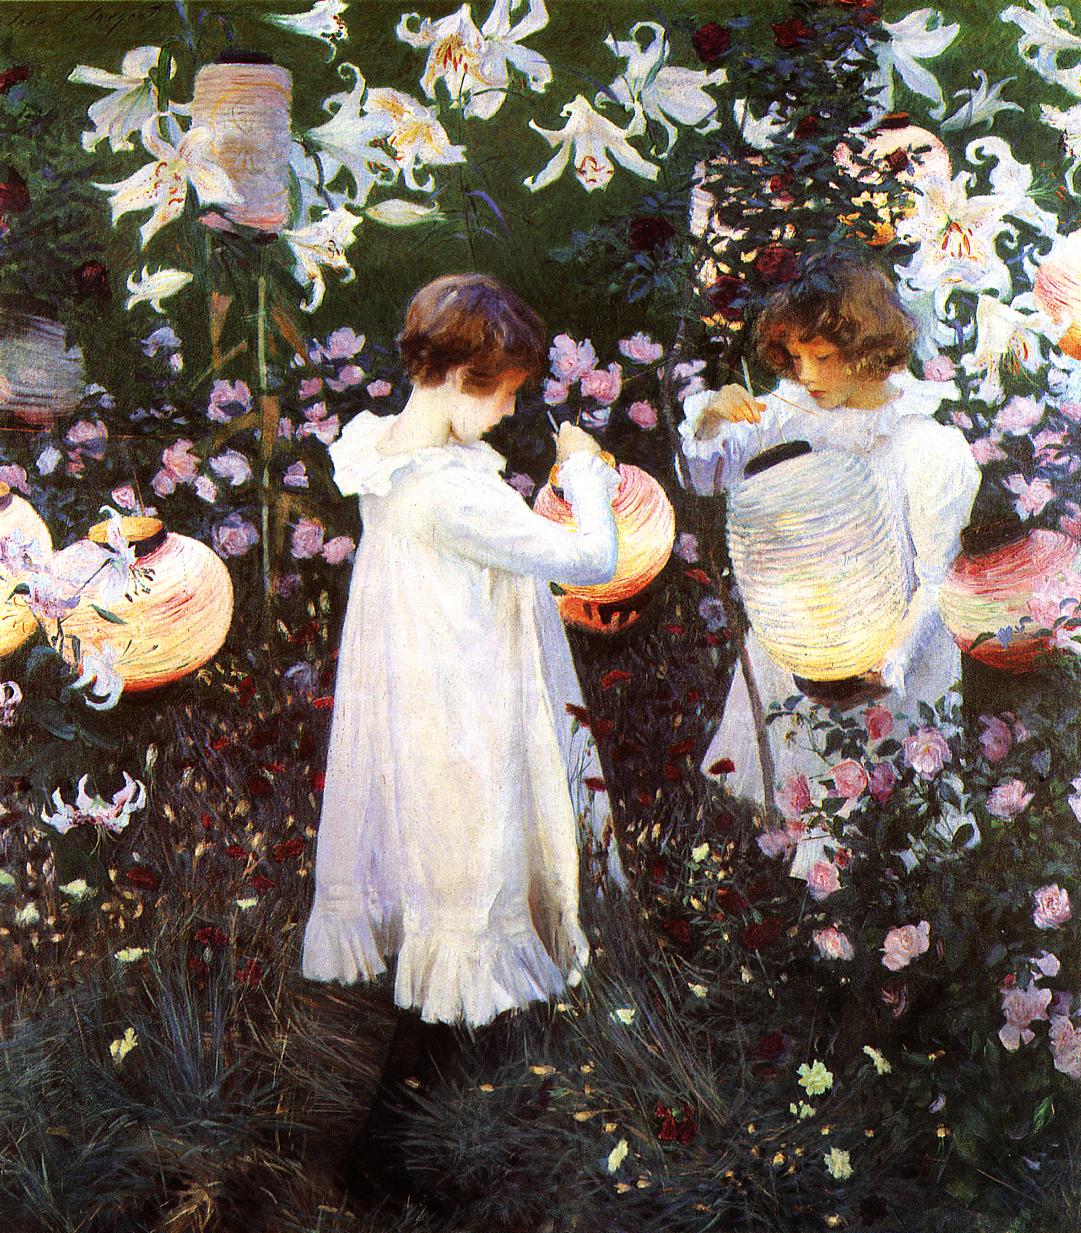 John Singer Sargent　1856～1925) American painter